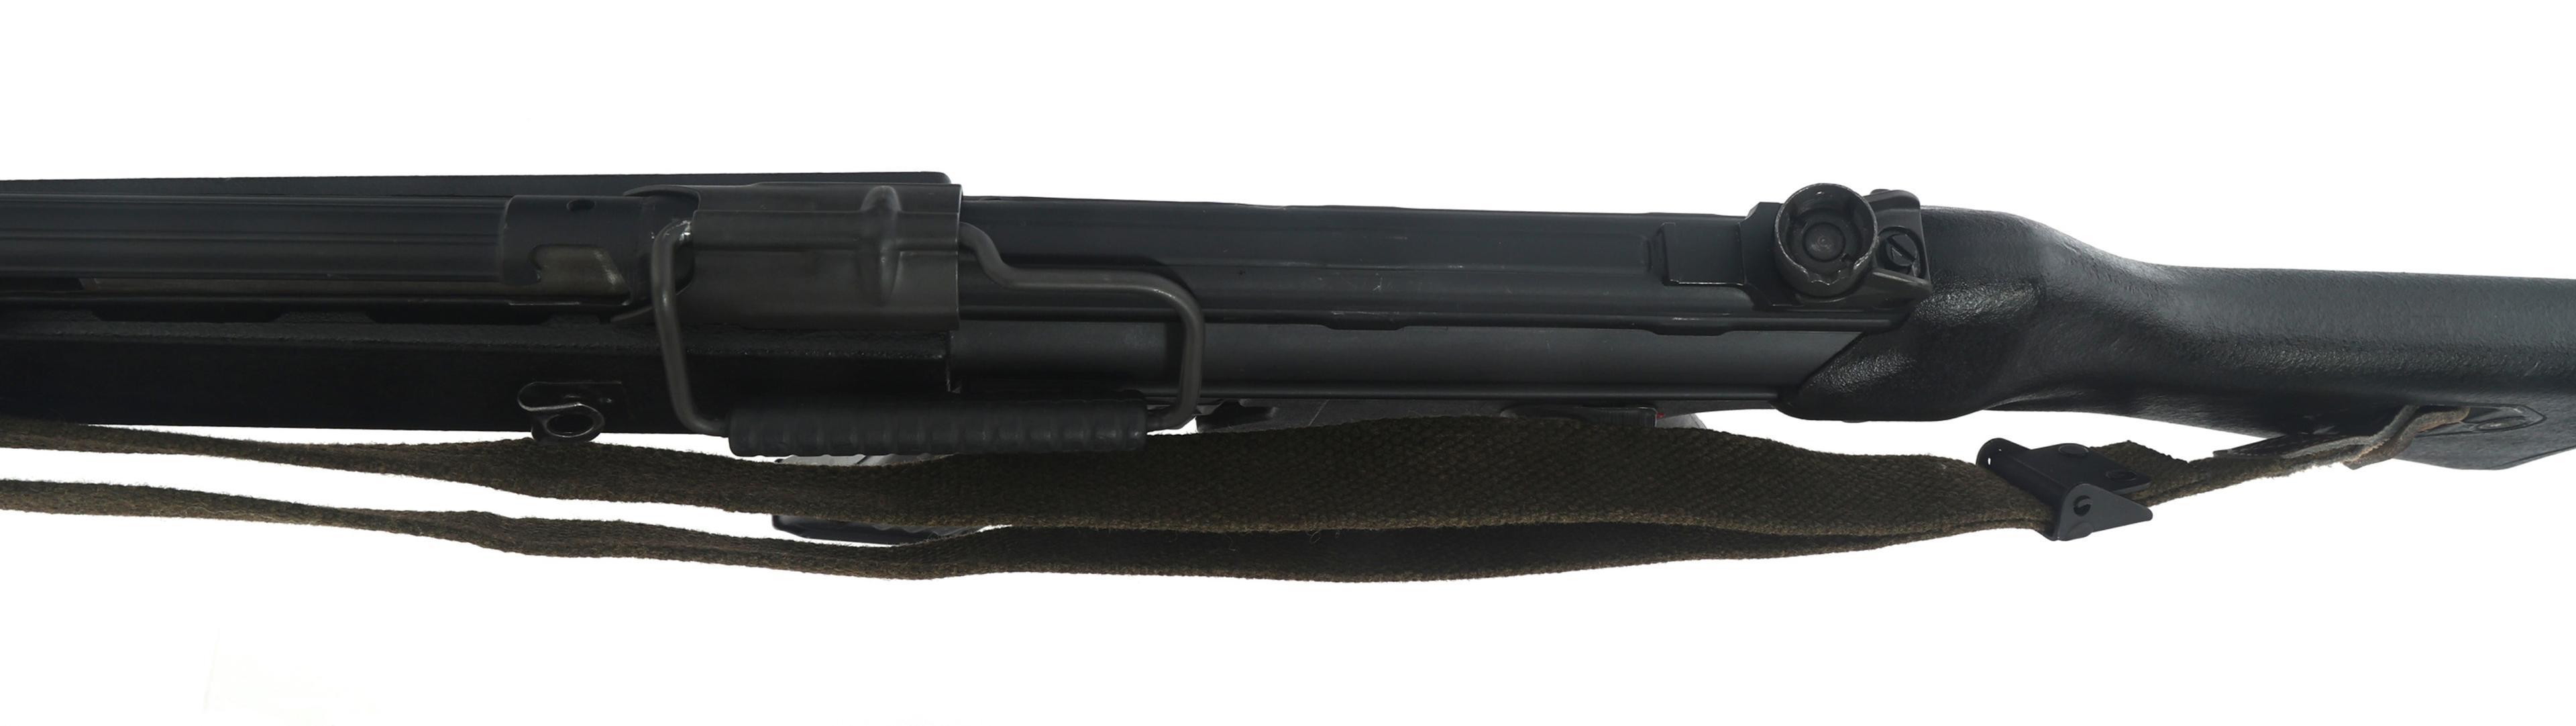 CENTURY ARMS MODEL C93 5.56mm CALIBER RIFLE